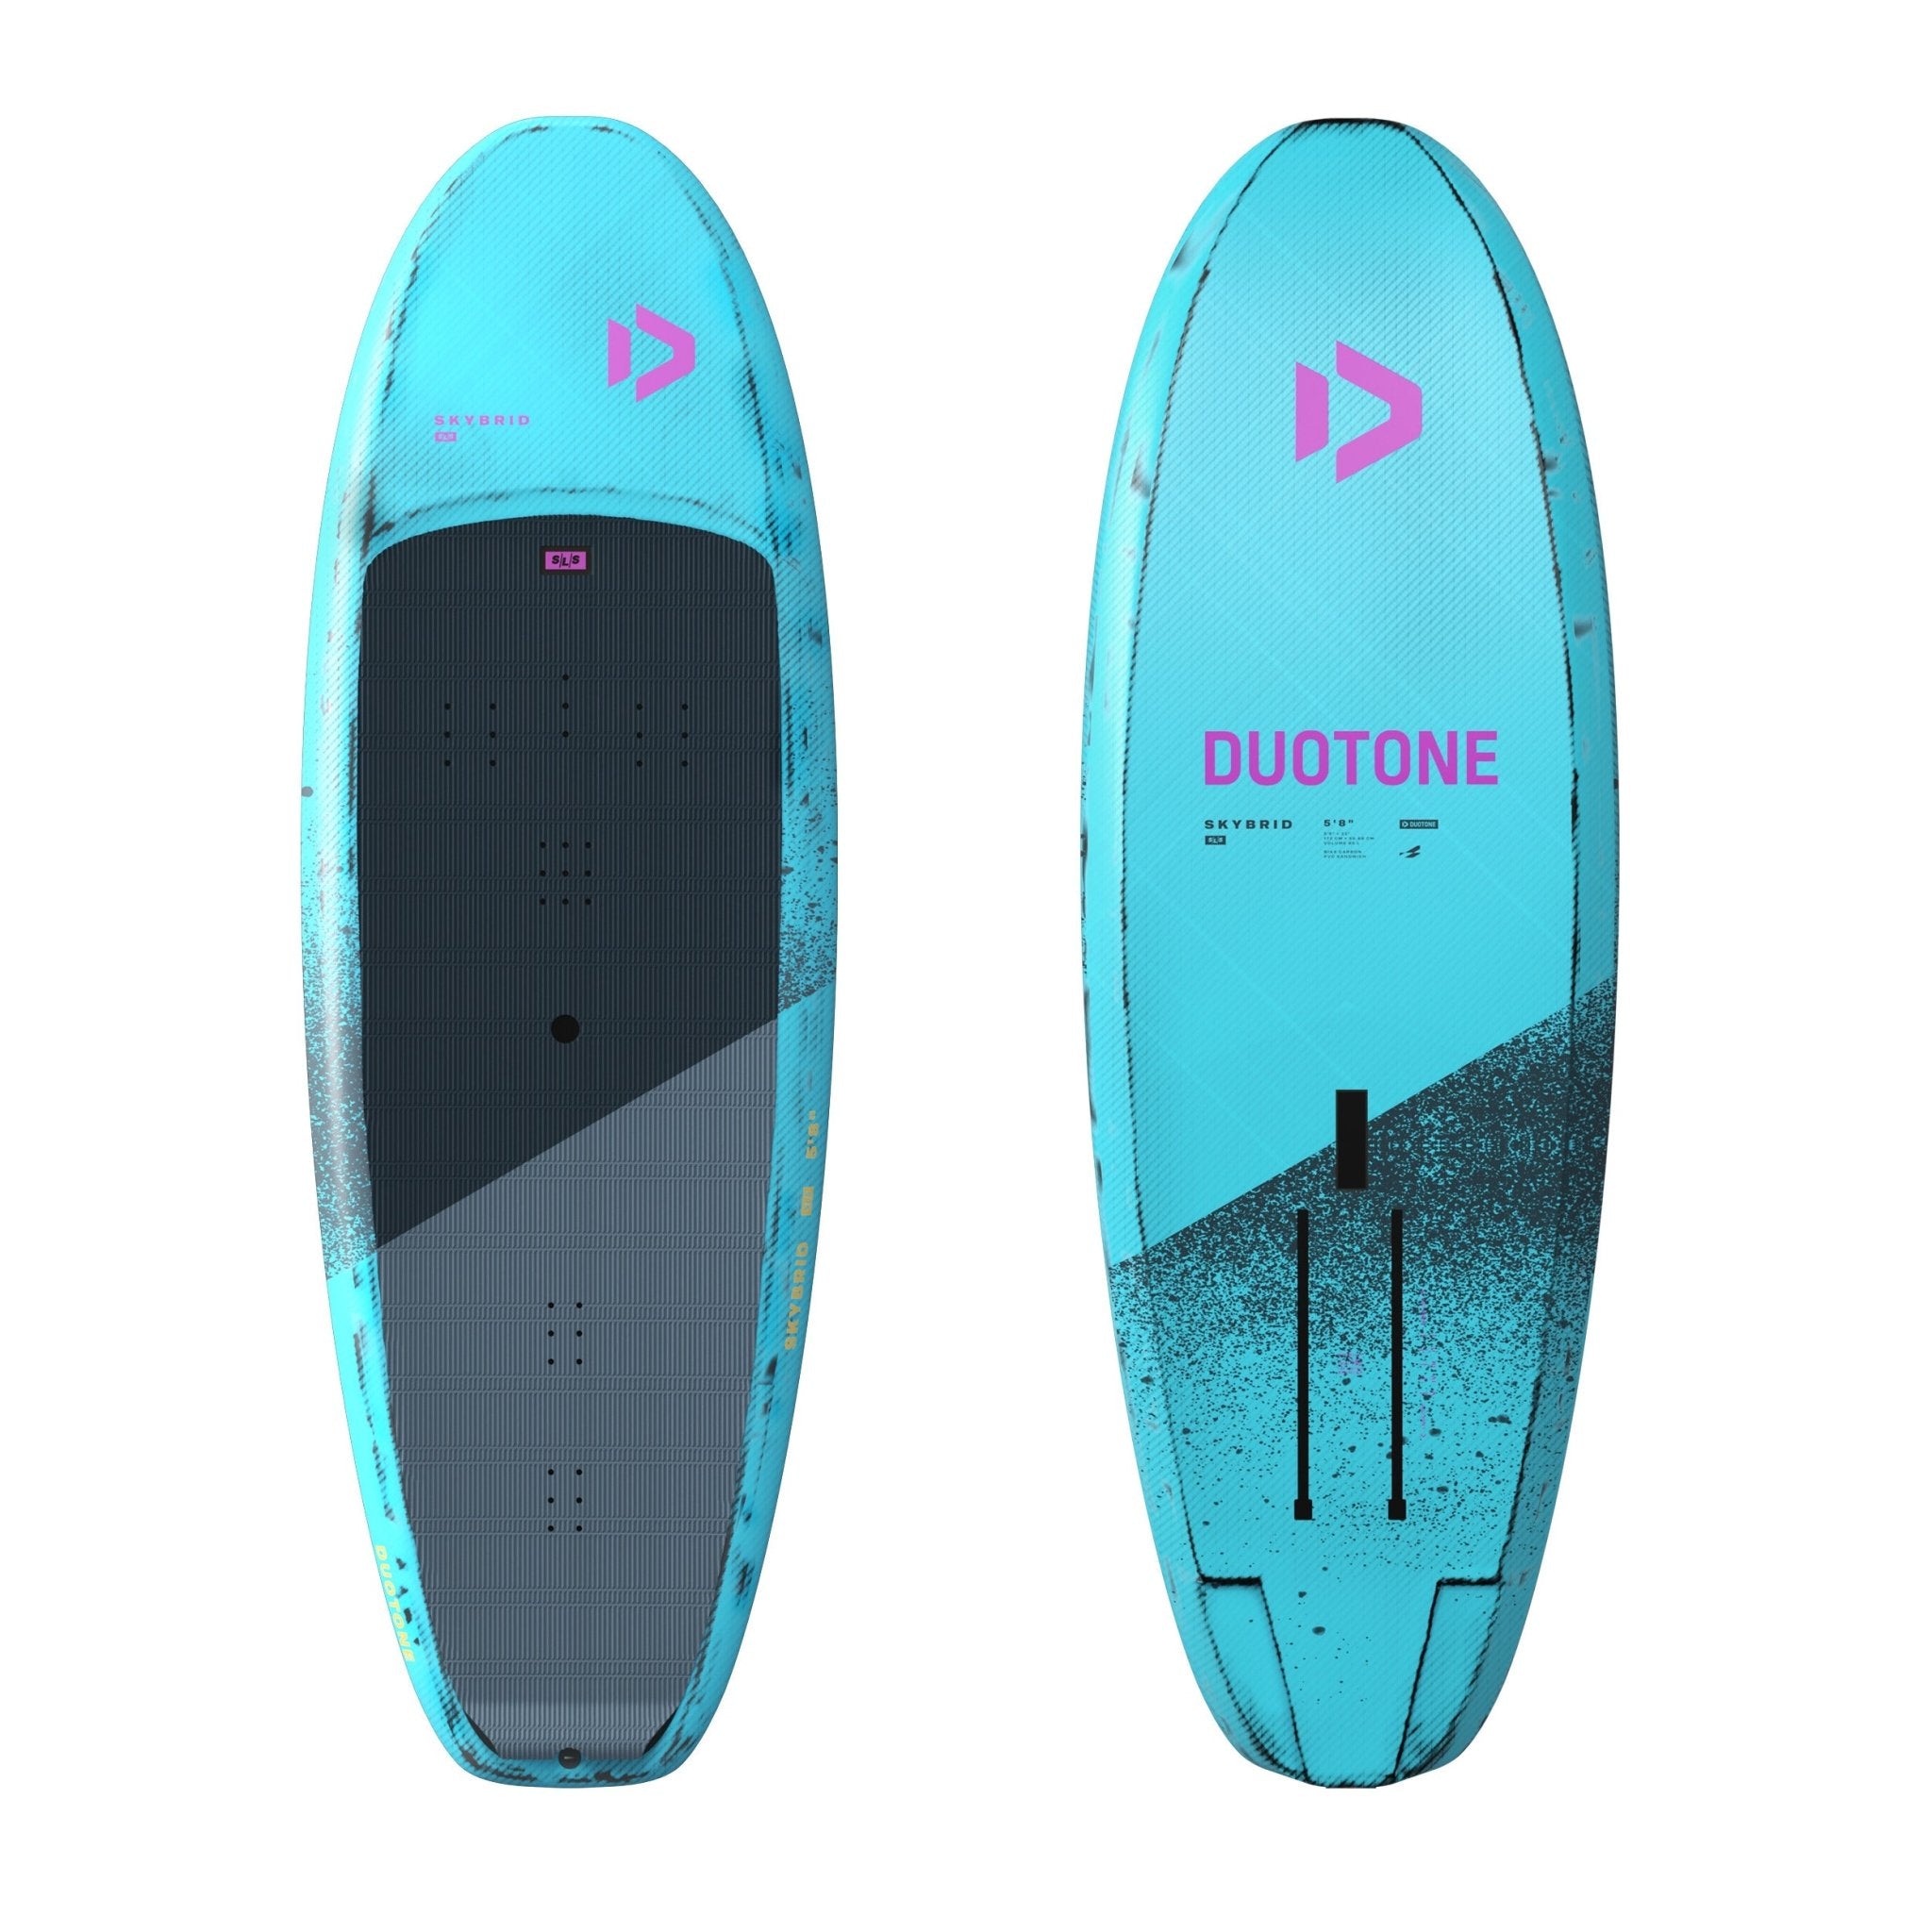 Duotone Foilboard Skybrid SLS 2025 - Worthing Watersports - 9010583238128 - Boards - Duotone X